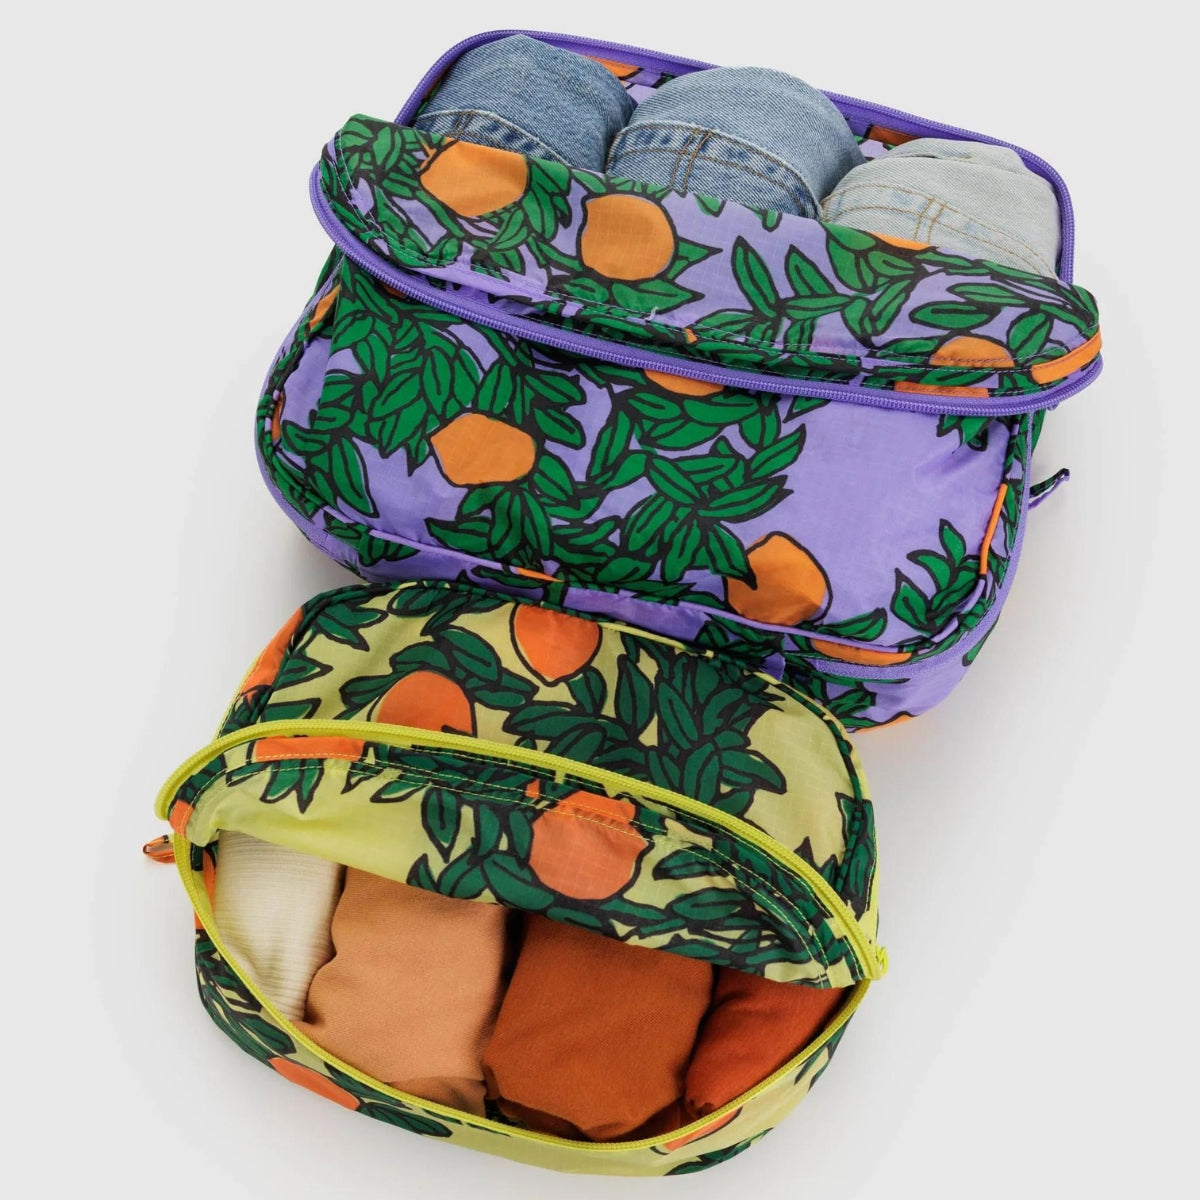 Baggu Packing Cube Set in Orange Trees